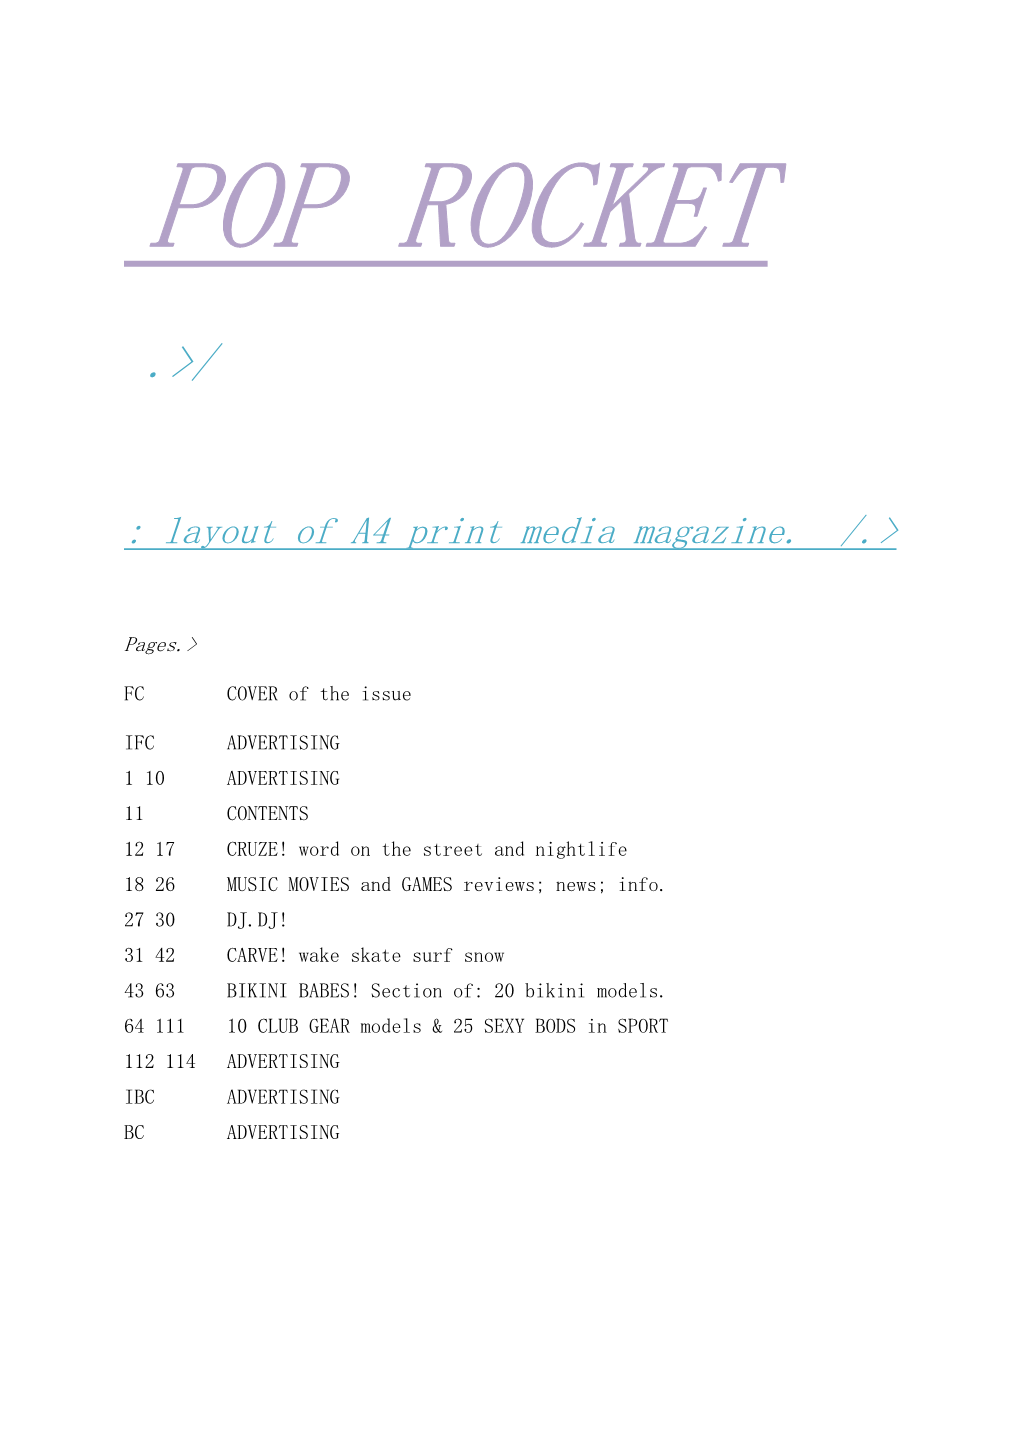 Poprocket Page & Info -- 30.05 Use.Pdf